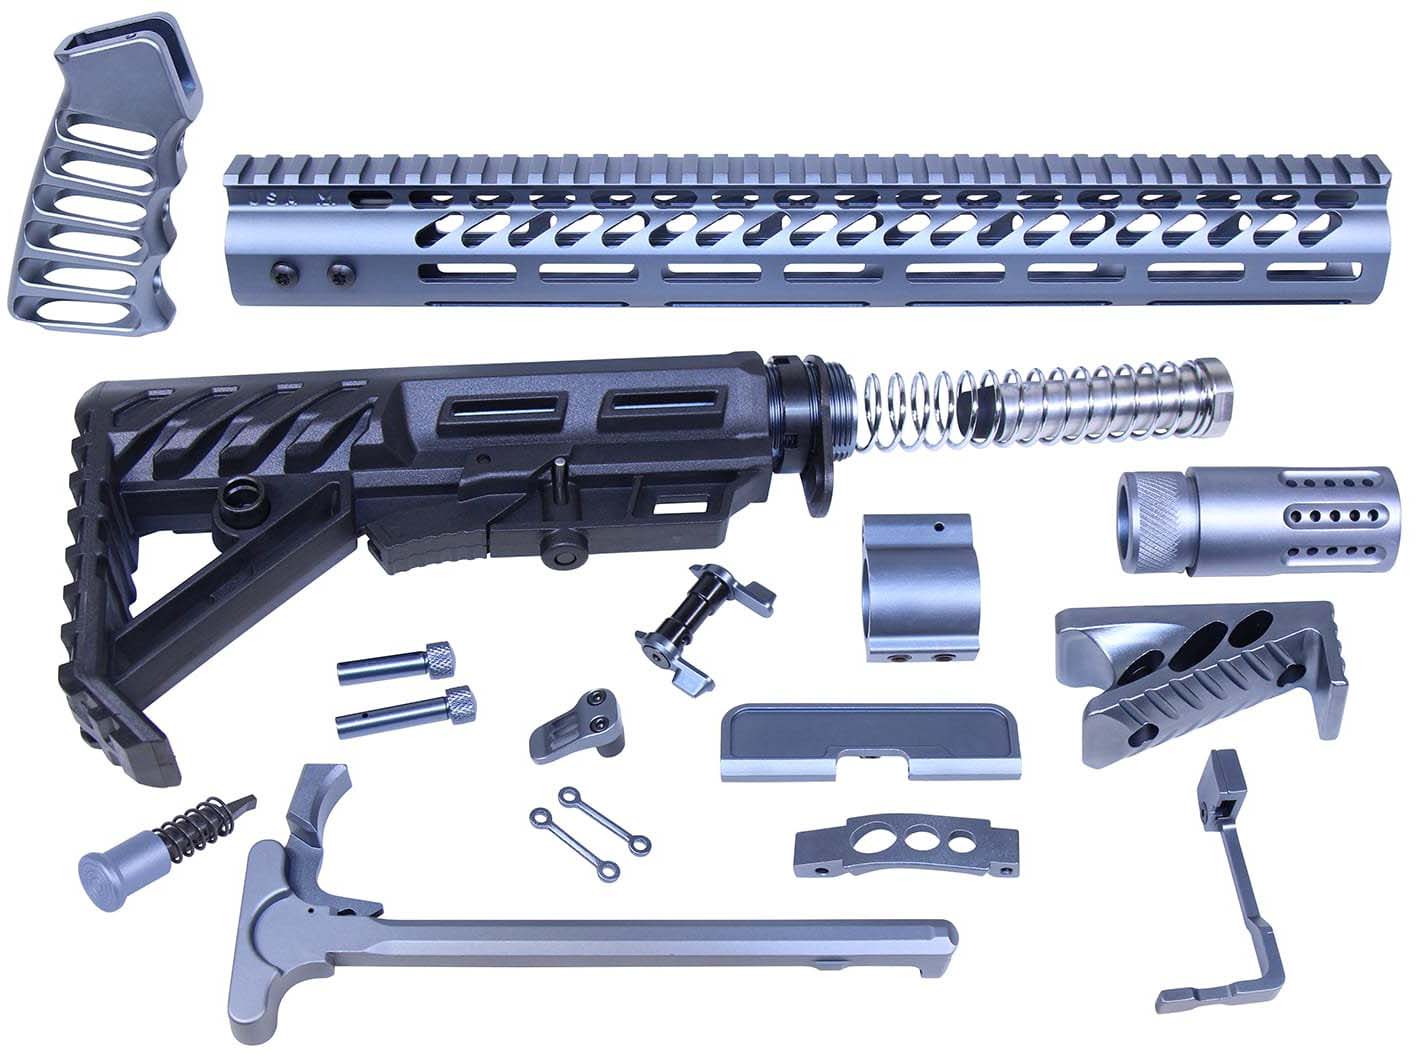 Guntec USA AR-15 Armorer's Gun Mat  4.6 Star Rating Free Shipping over $49!